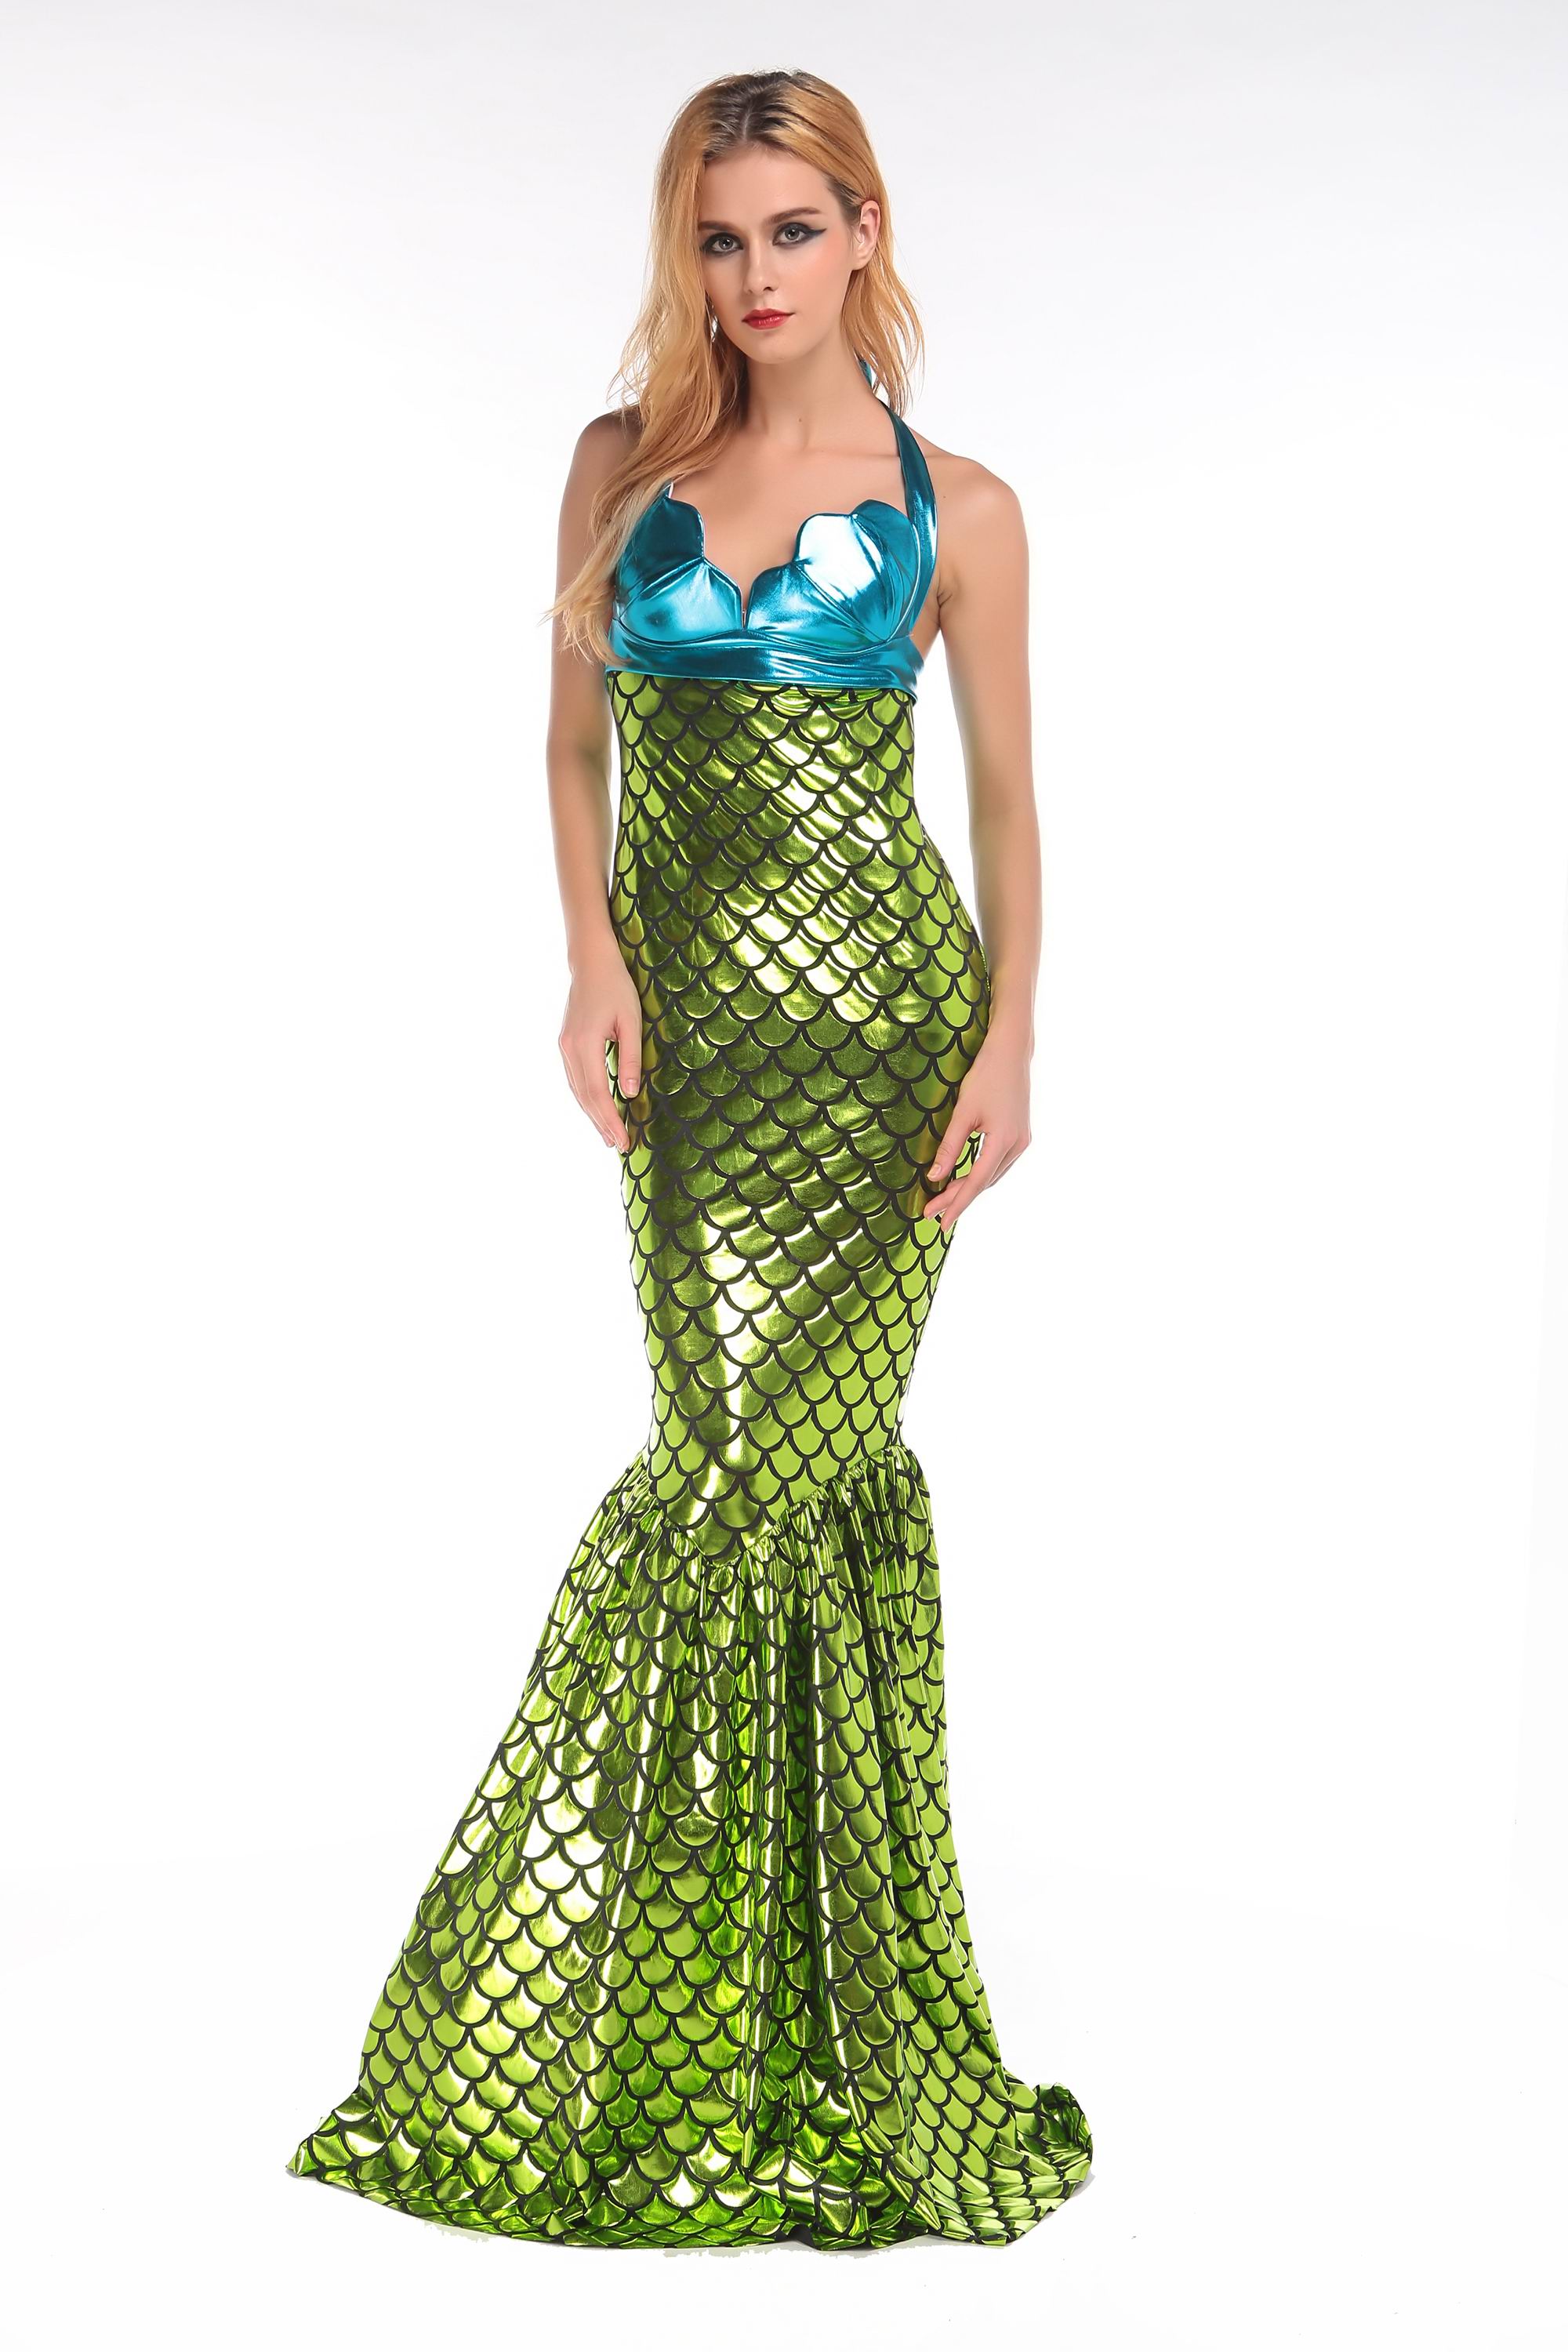 F66182 Sexy Sea Mermaid Costume